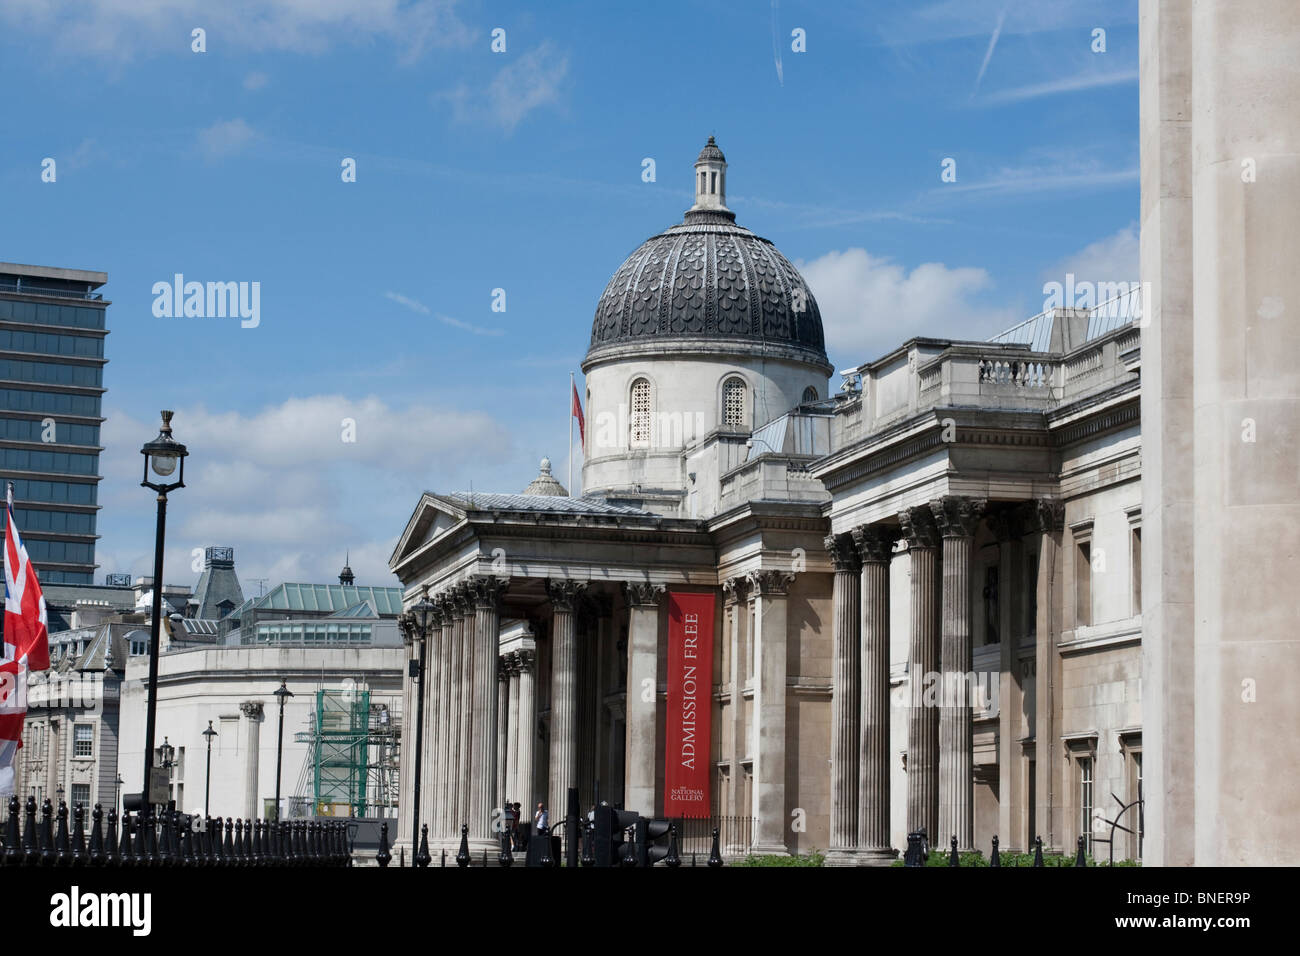 The National Gallery, London, England, UK Stock Photo